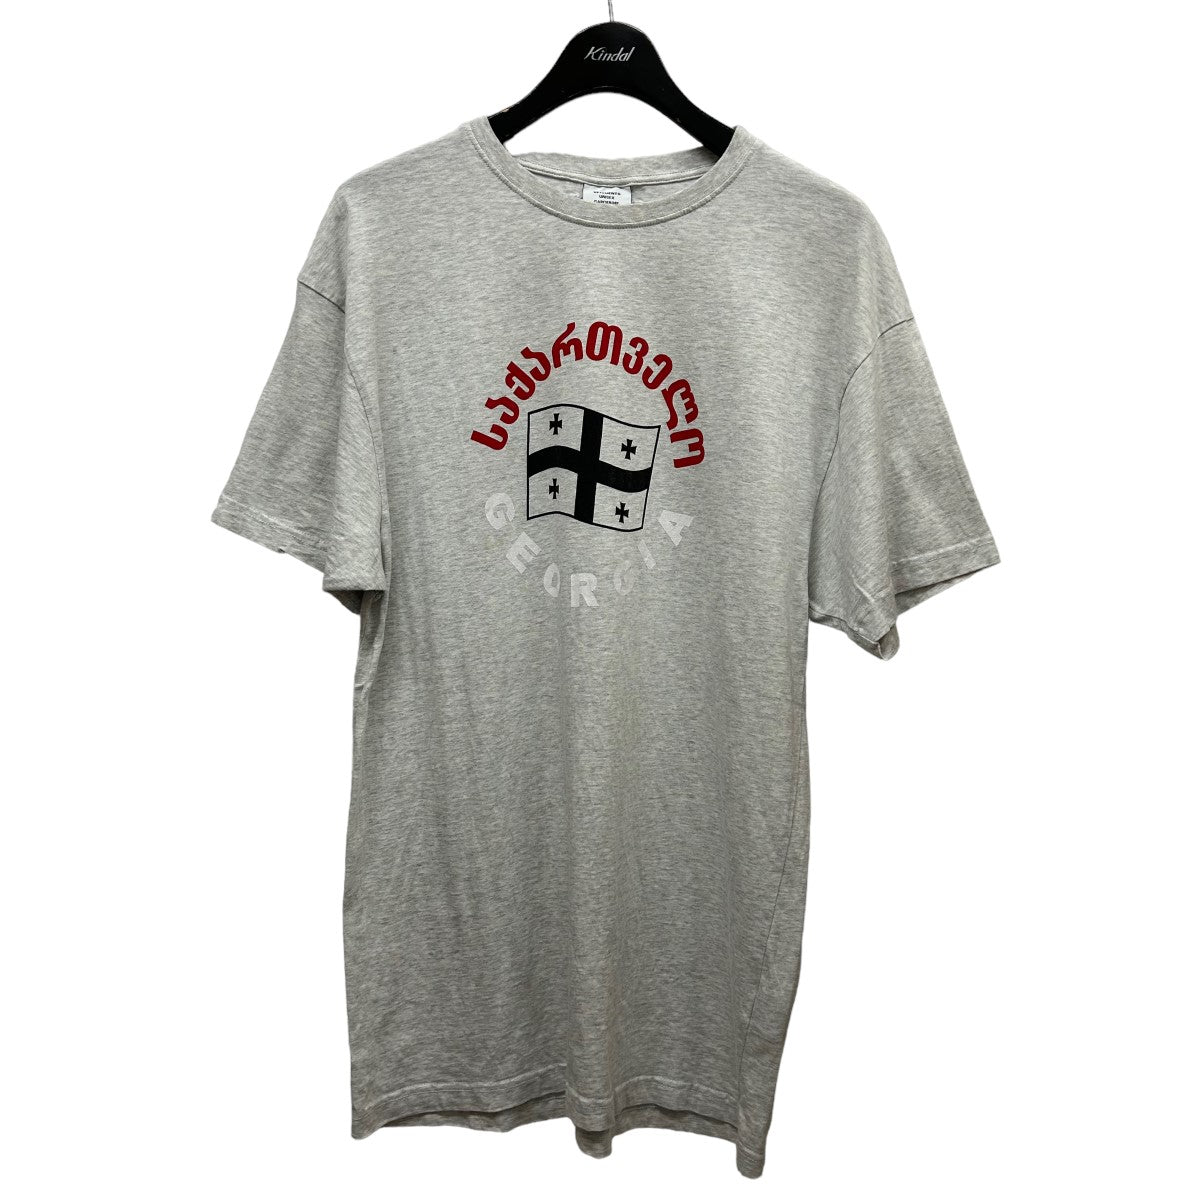 VETEMENTS(ヴェトモン) GEORGIA Flag T-shirtプリントTシャツUSS197069 USS197069 グレー サイズ  S｜【公式】カインドオルオンライン ブランド古着・中古通販【kindal】